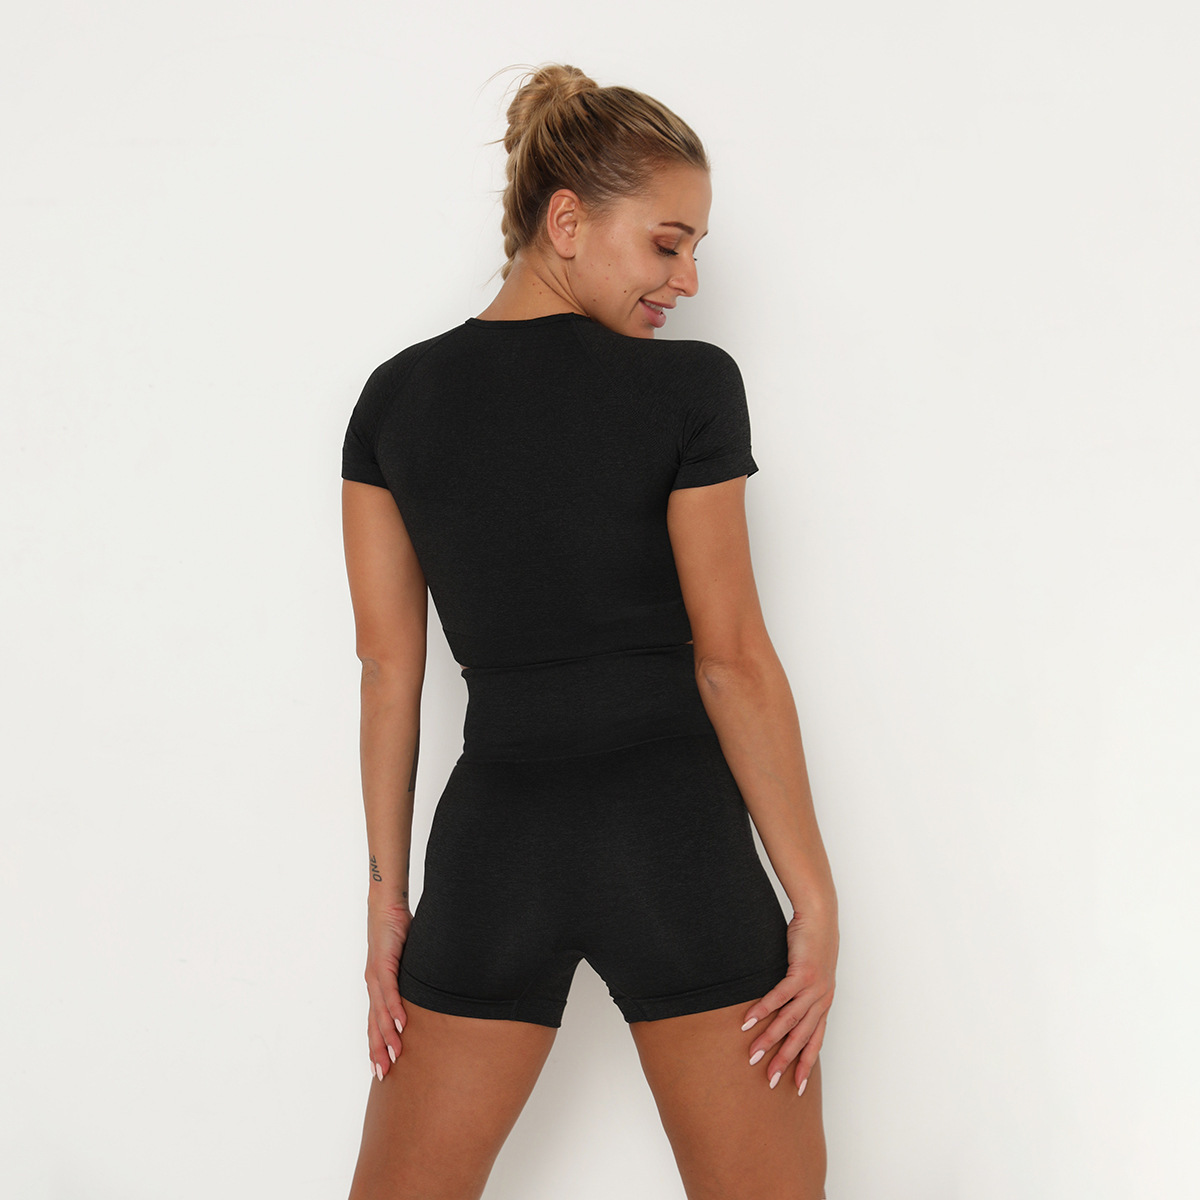 short-sleeved seamless knitted high waist hip tight shorts set NSLX8996